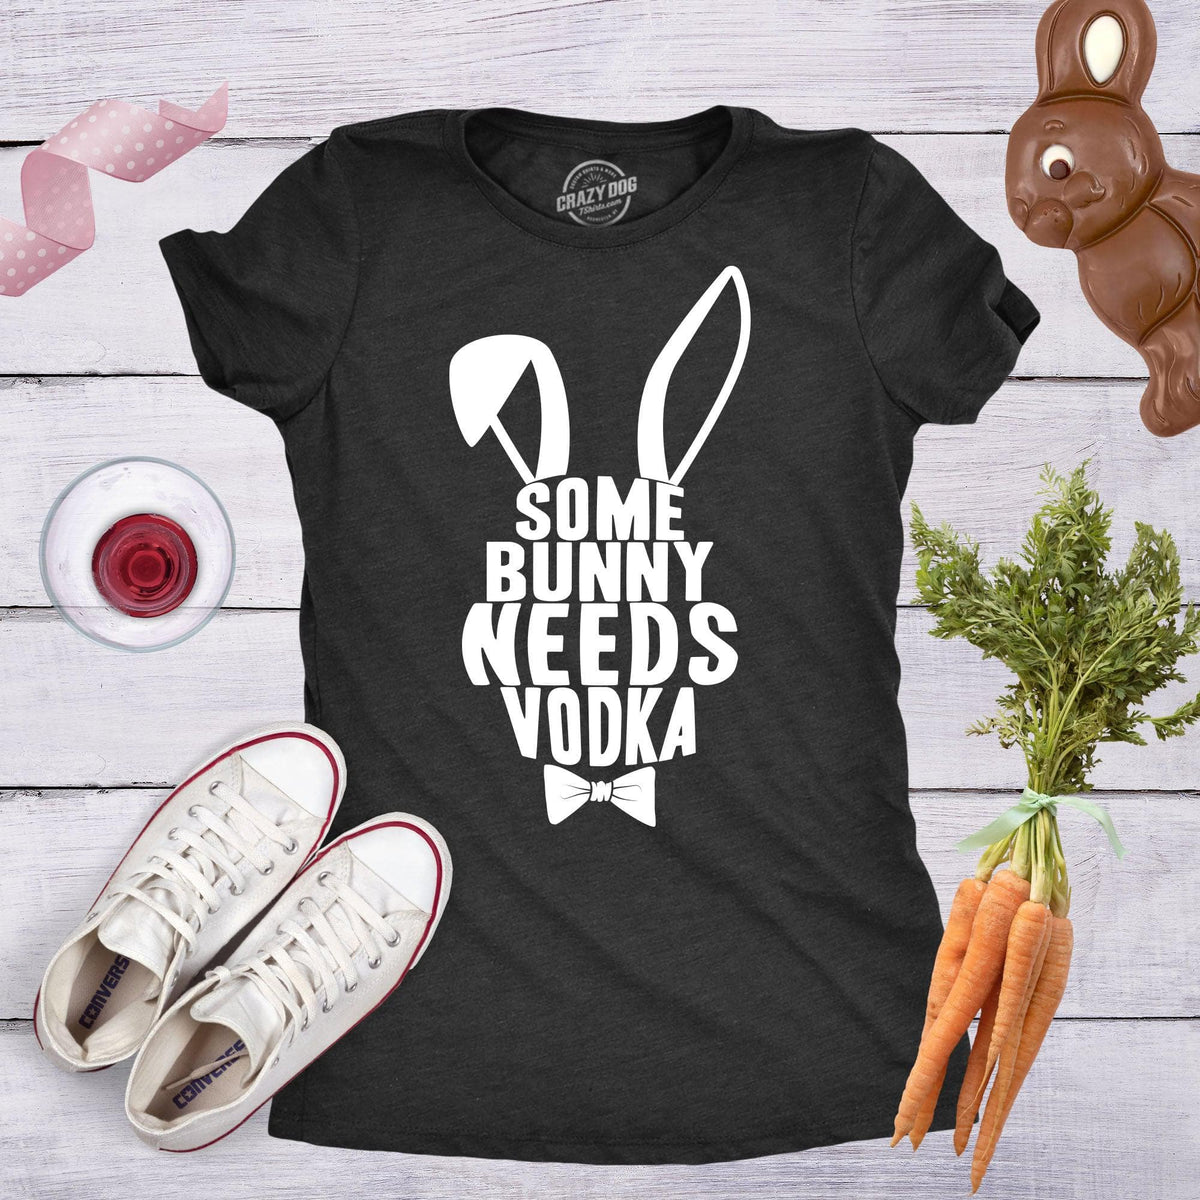 Some Bunny Needs Vodka Women&#39;s Tshirt  -  Crazy Dog T-Shirts